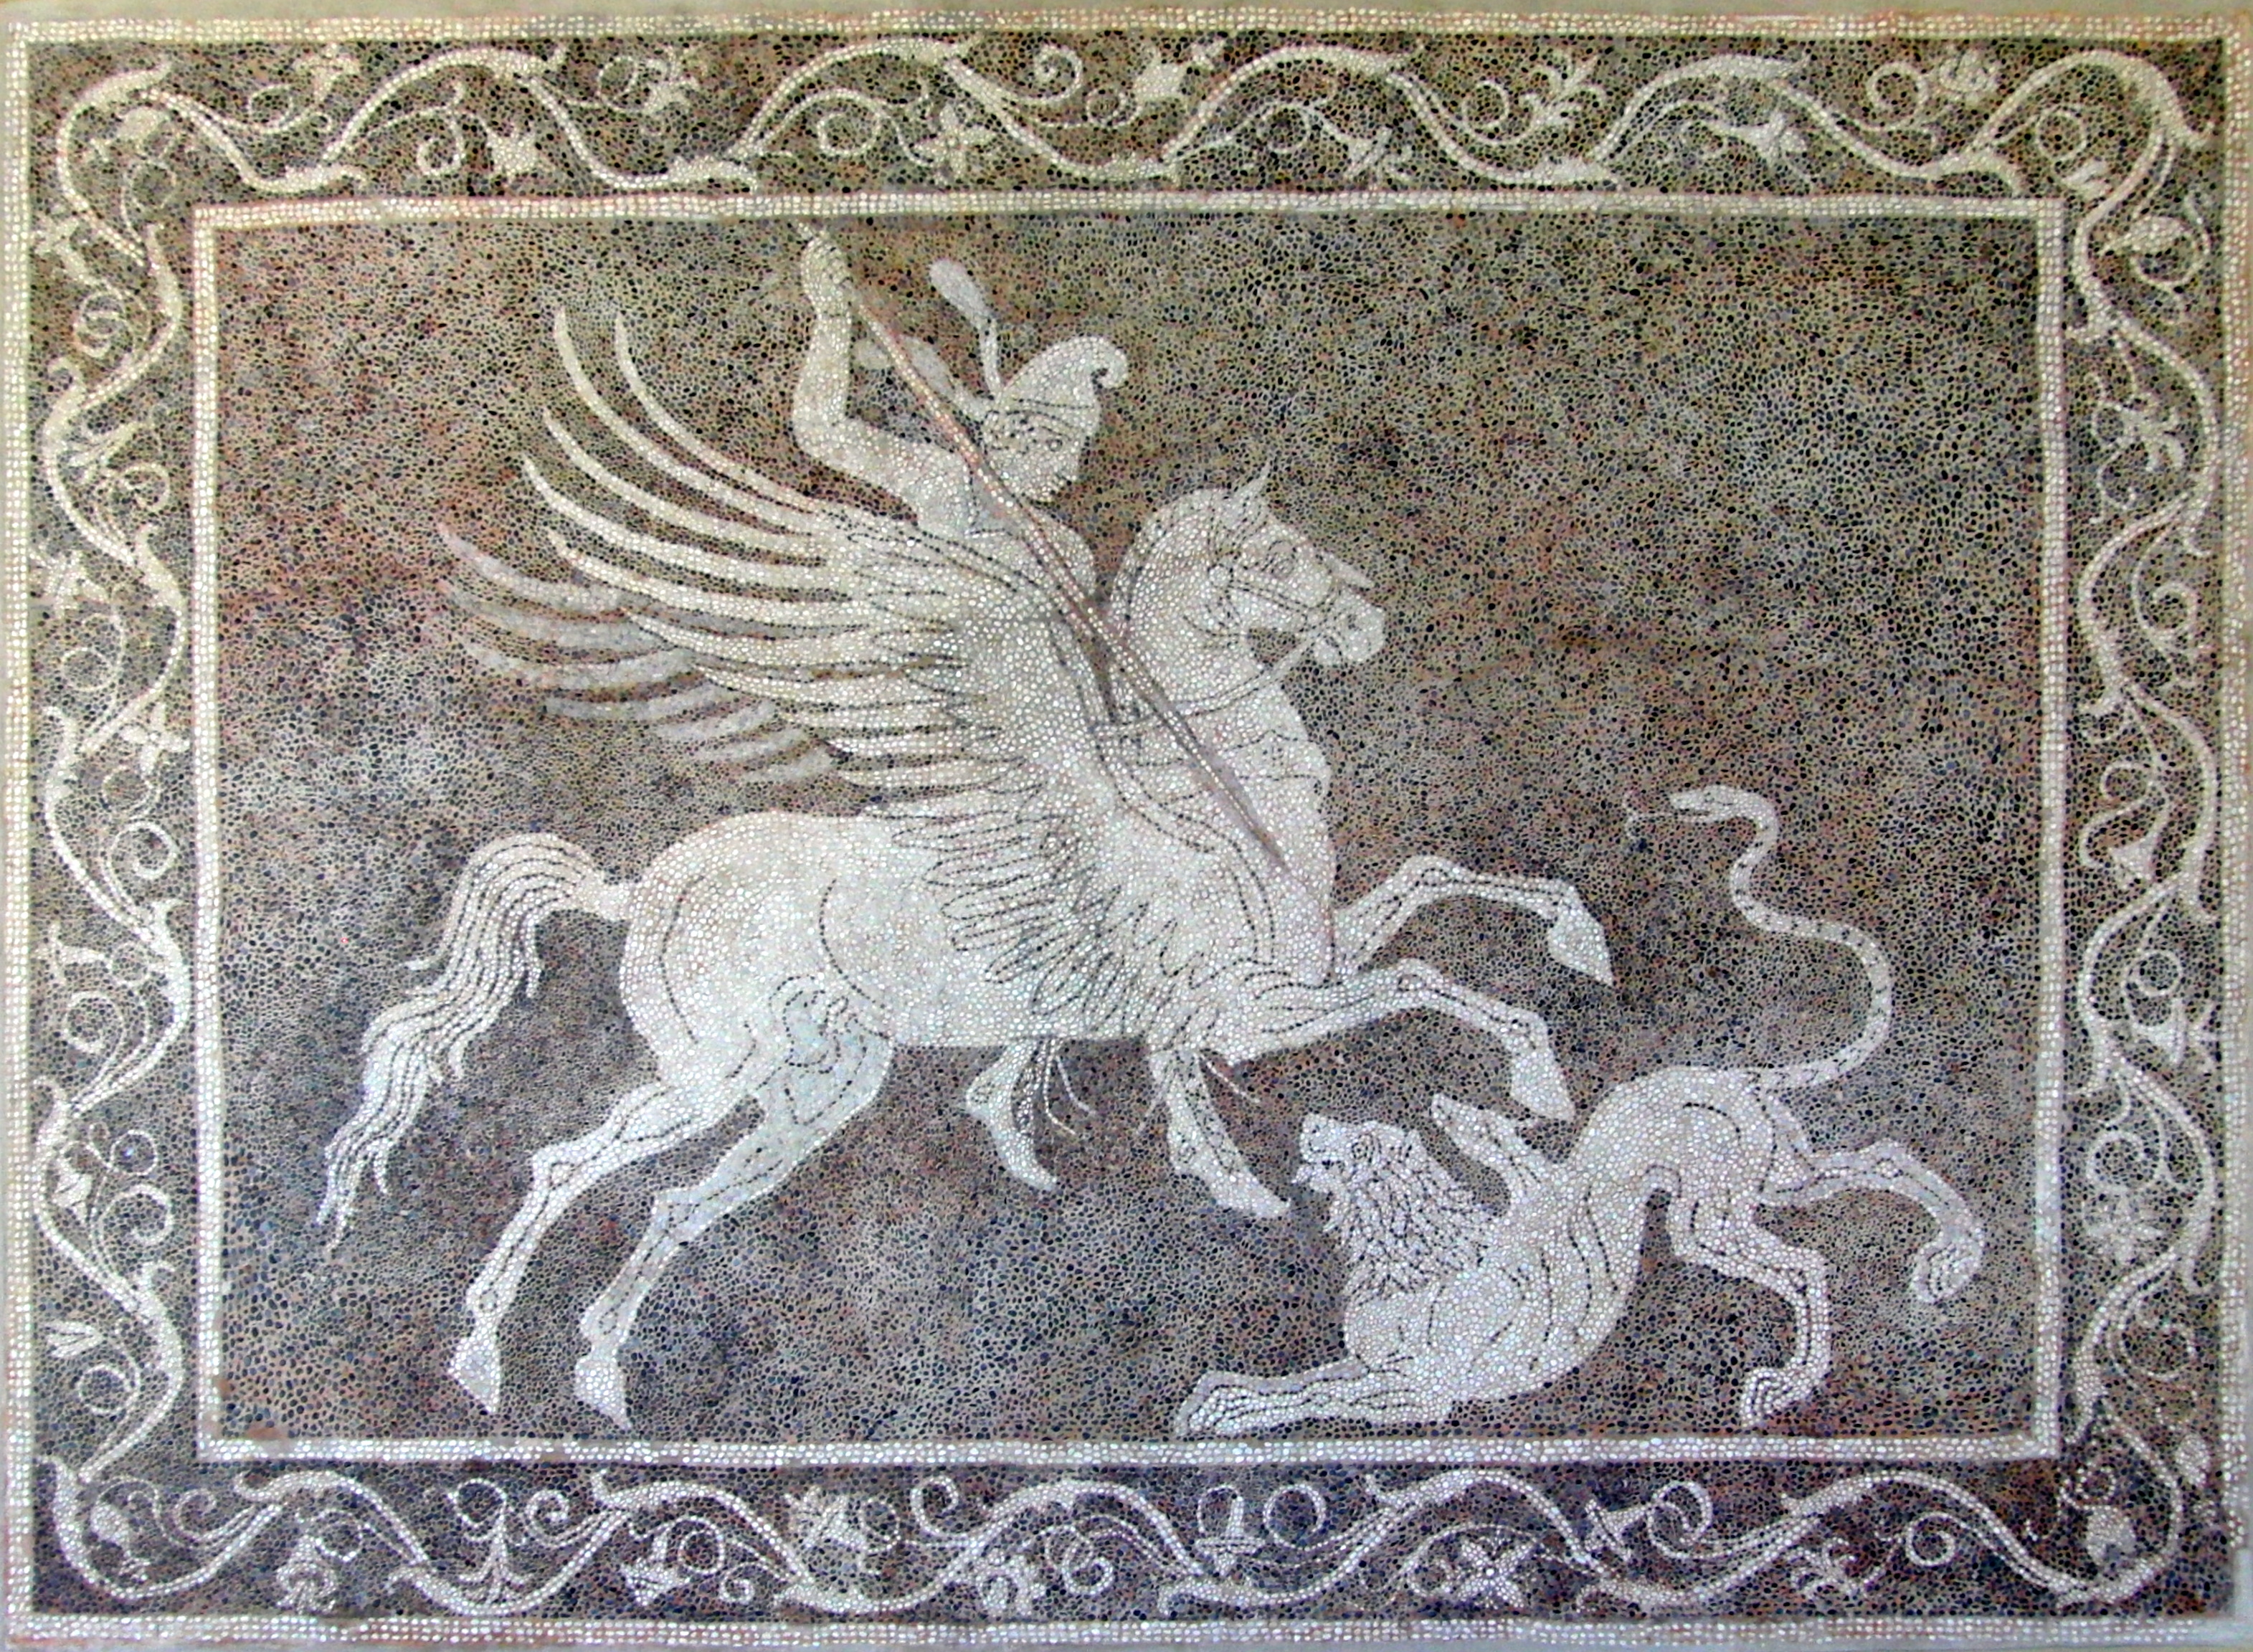 Mosaic of Bellerophon slaying the chimera